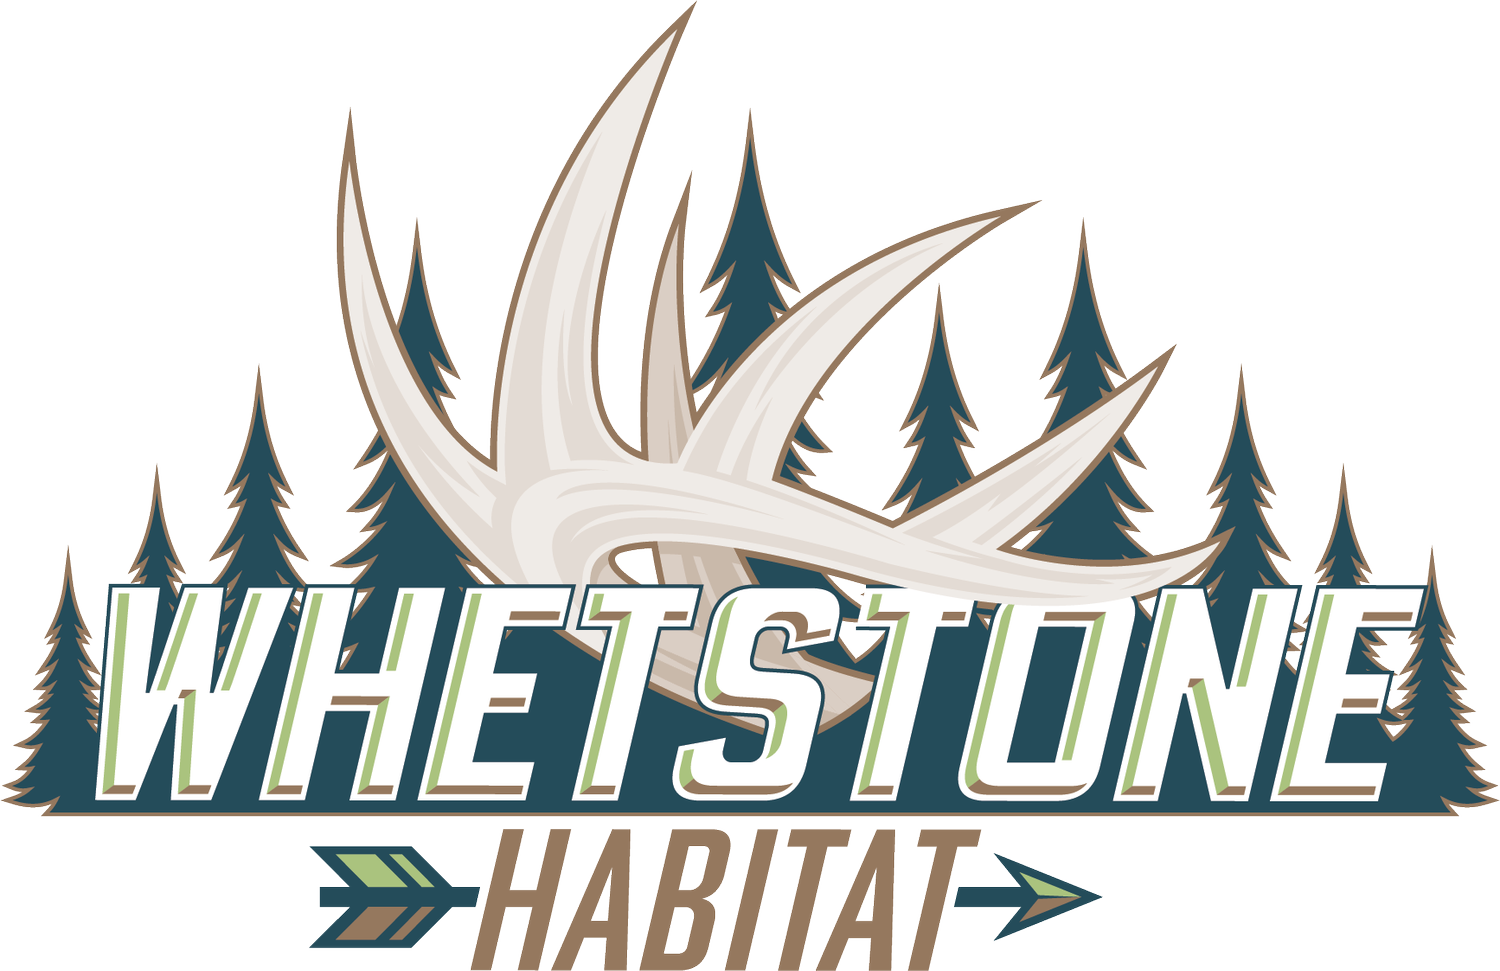 Whetstone Habitat LLC